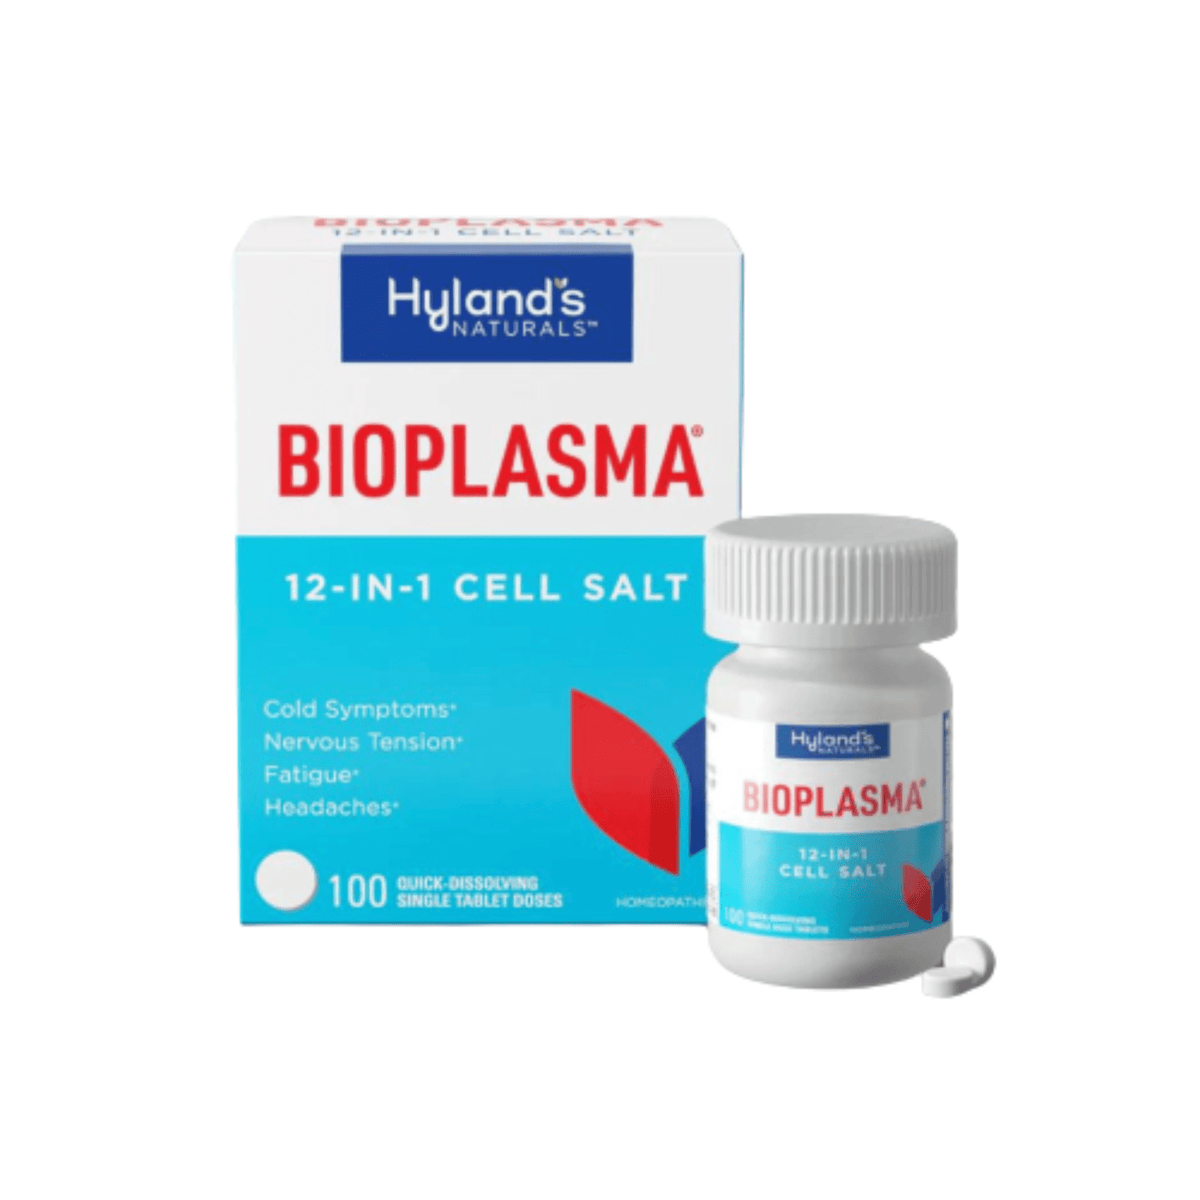 Primary Image of Bioplasma Cell Salt Tablets